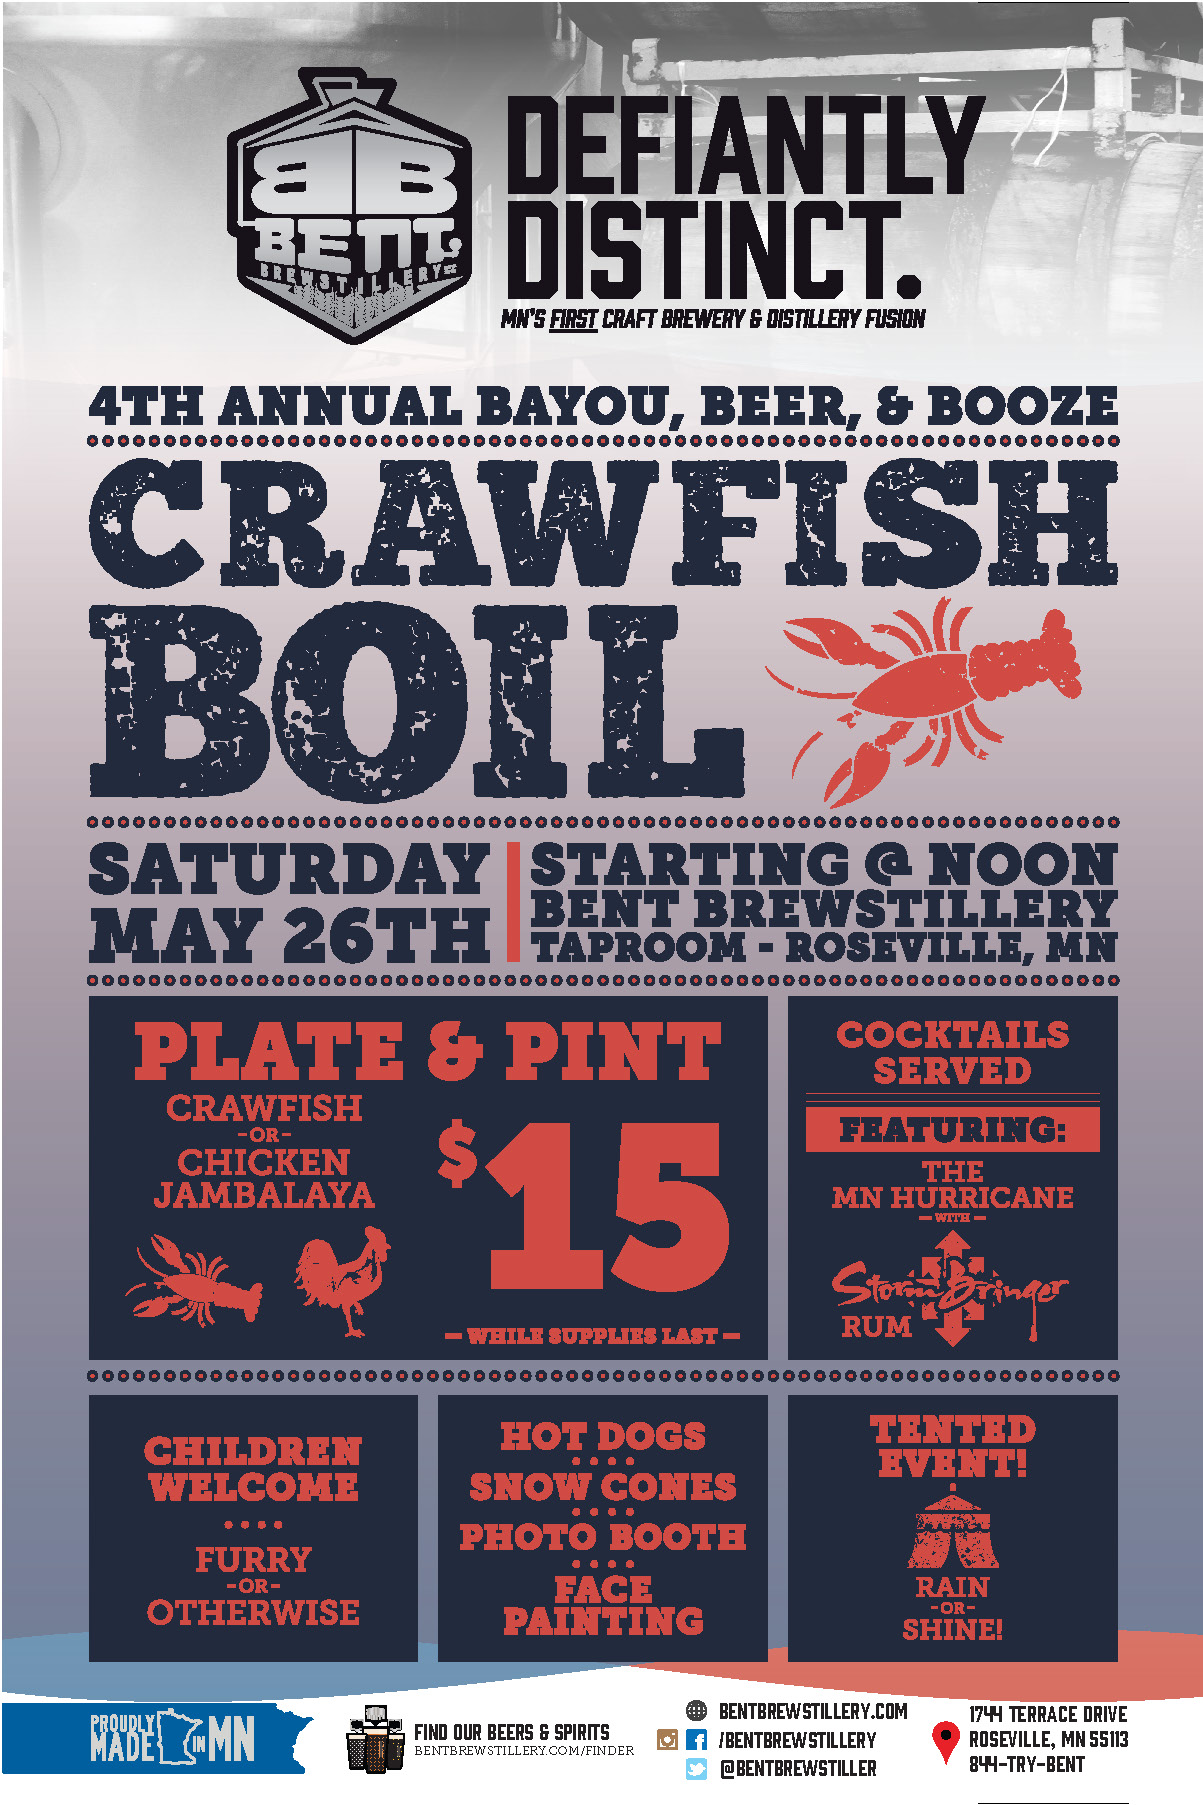 4th Annual Bayou, Beer & Booze Crawfish Boil